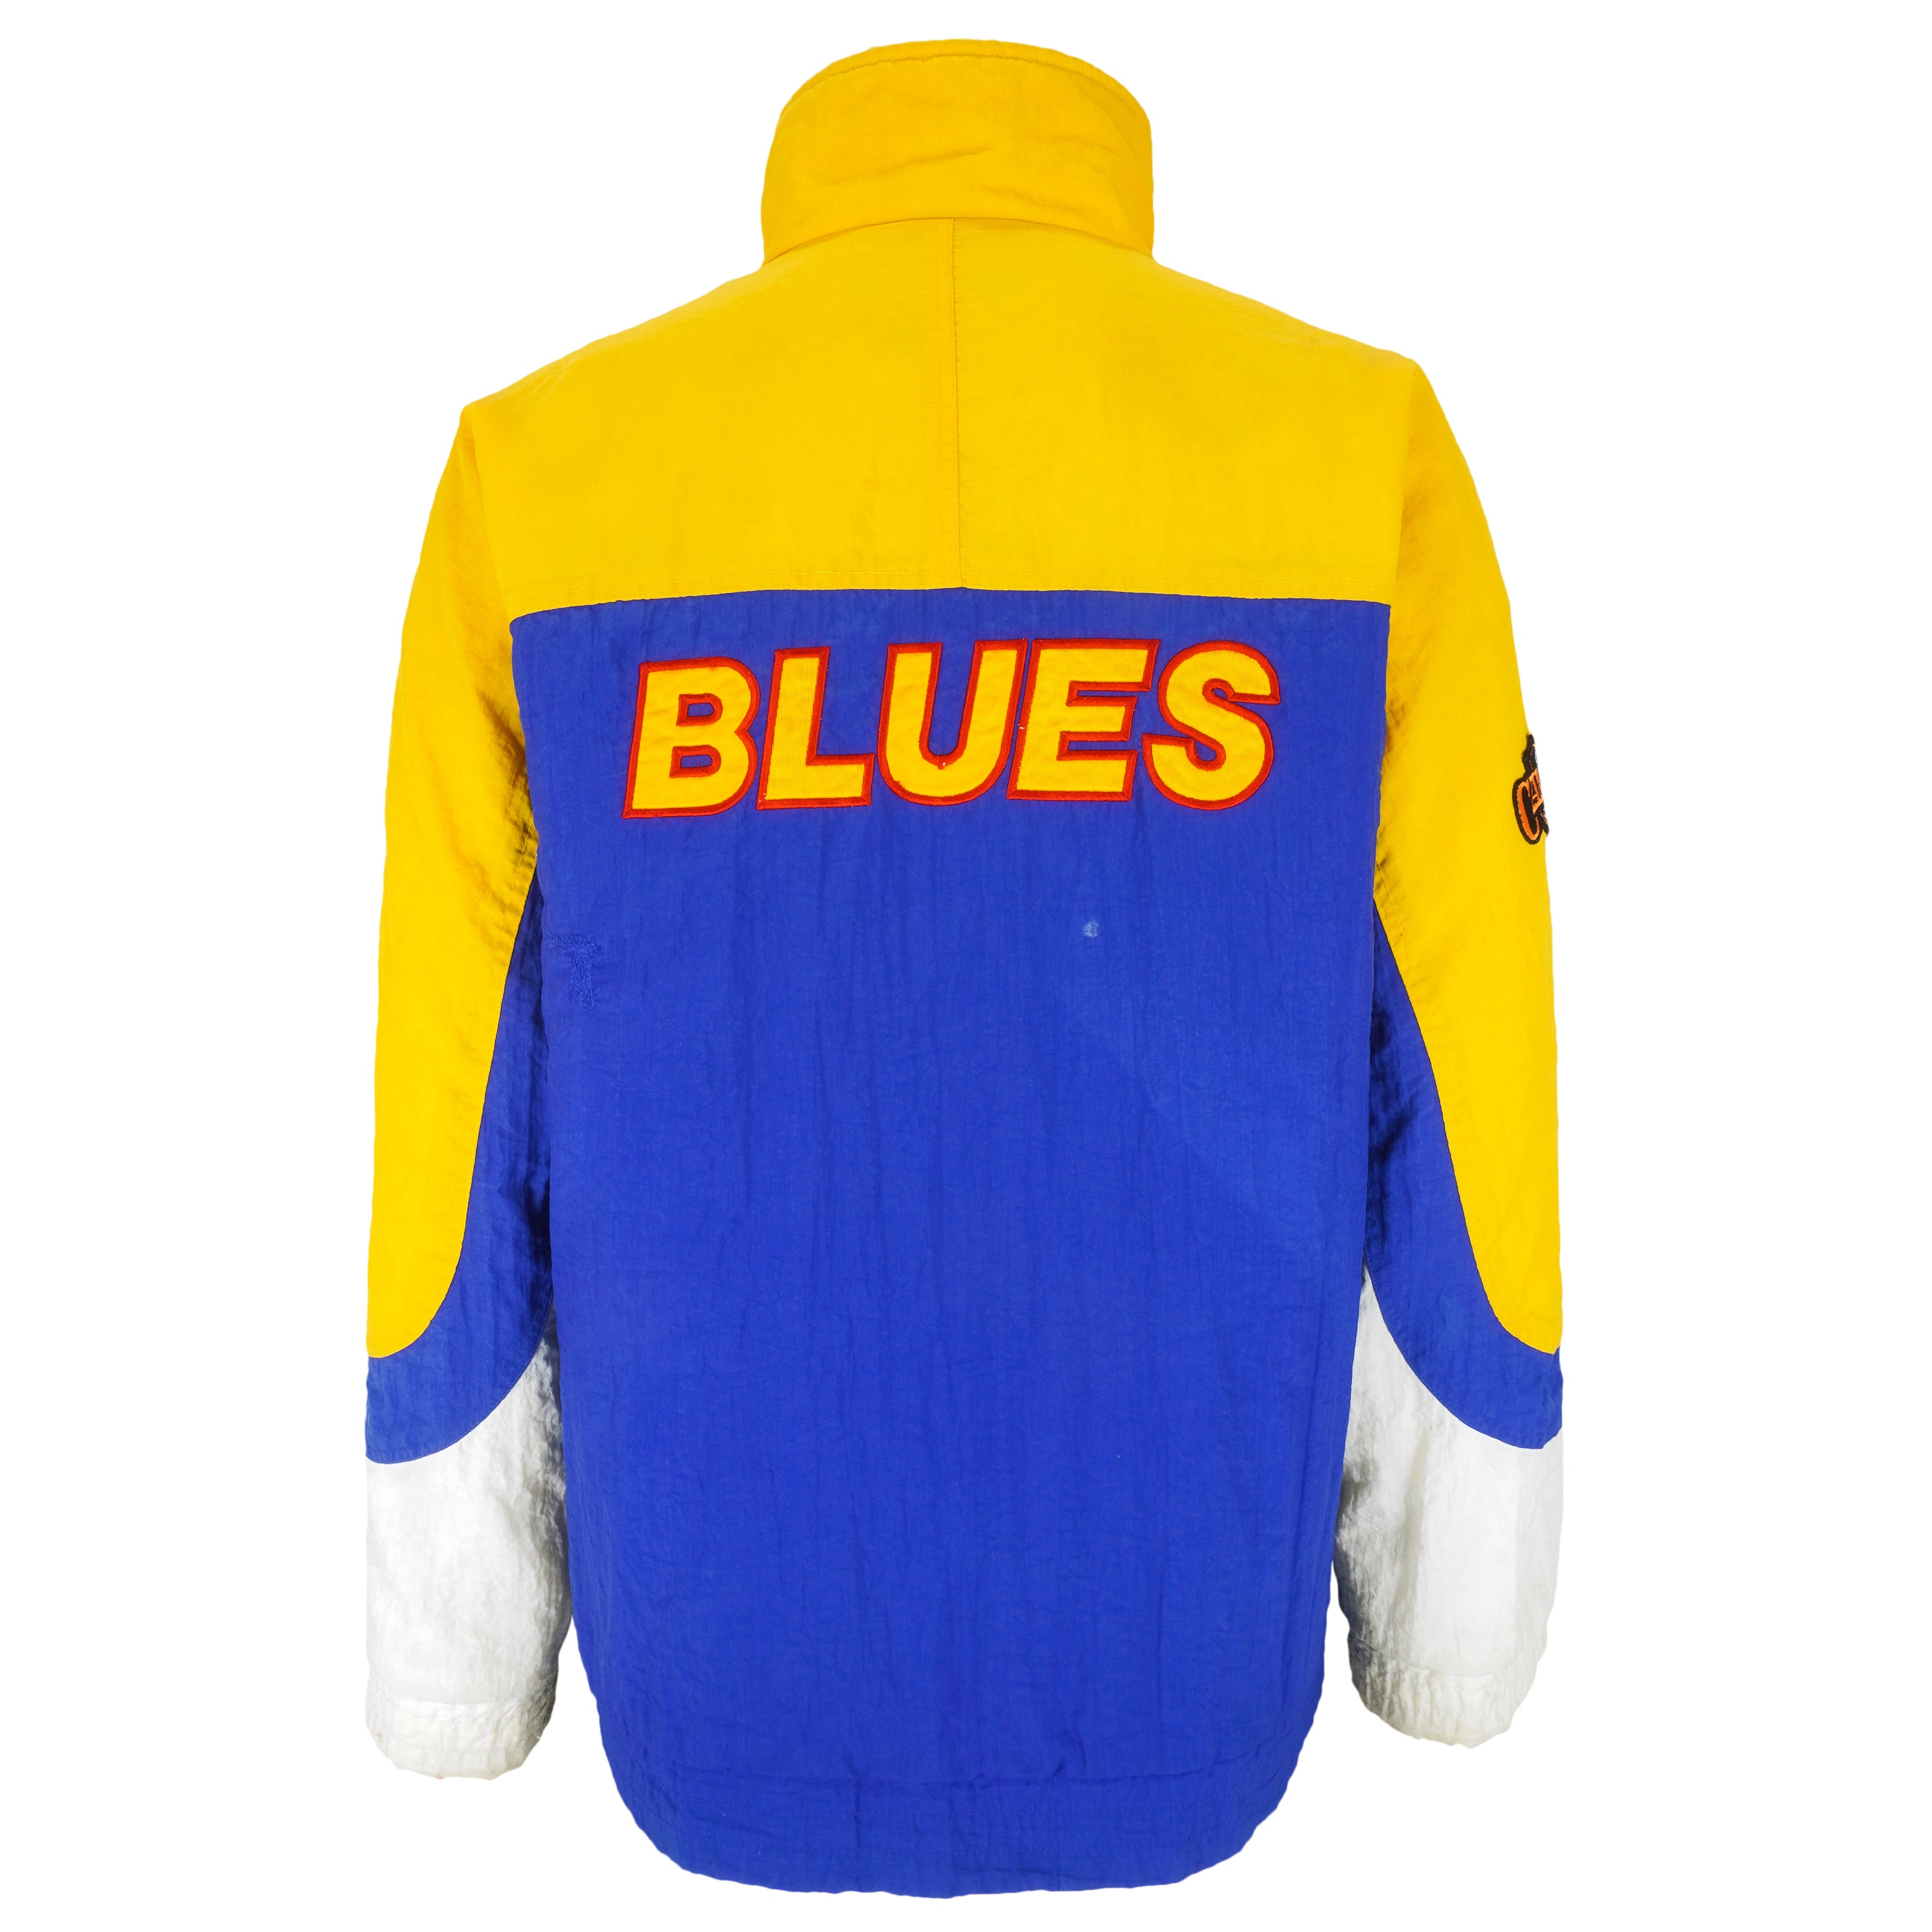 St. Louis Blues - You've seen our 90's Vintage jerseys, but what